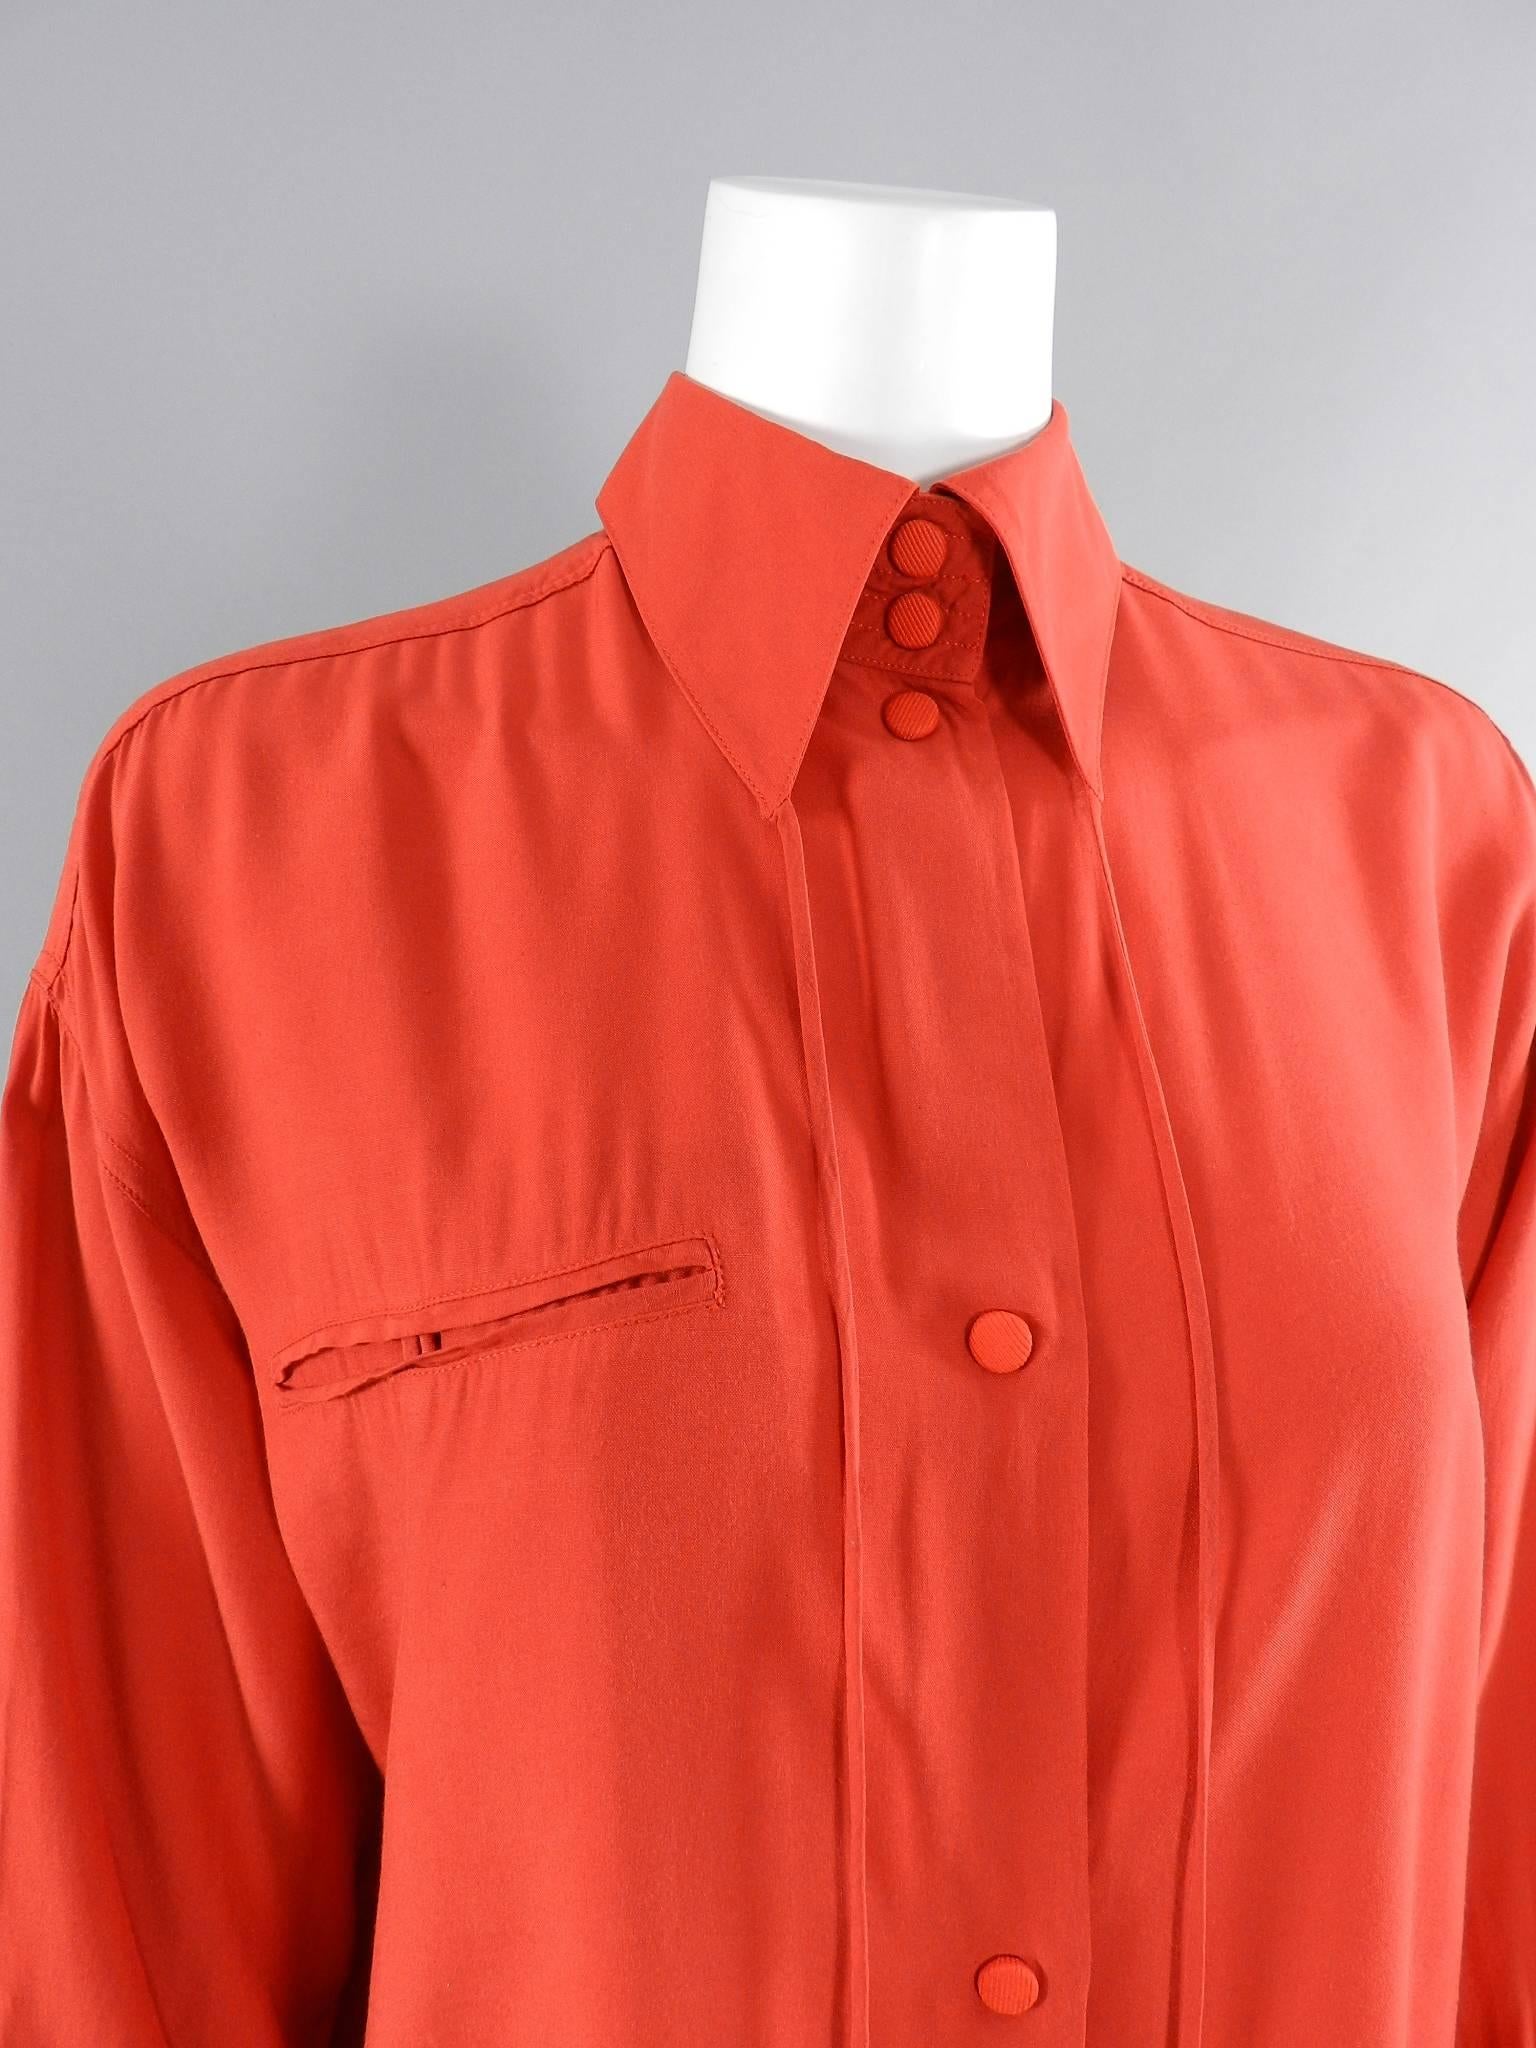 Women's Claude Montana 1980's Orange Shirt with String Collar